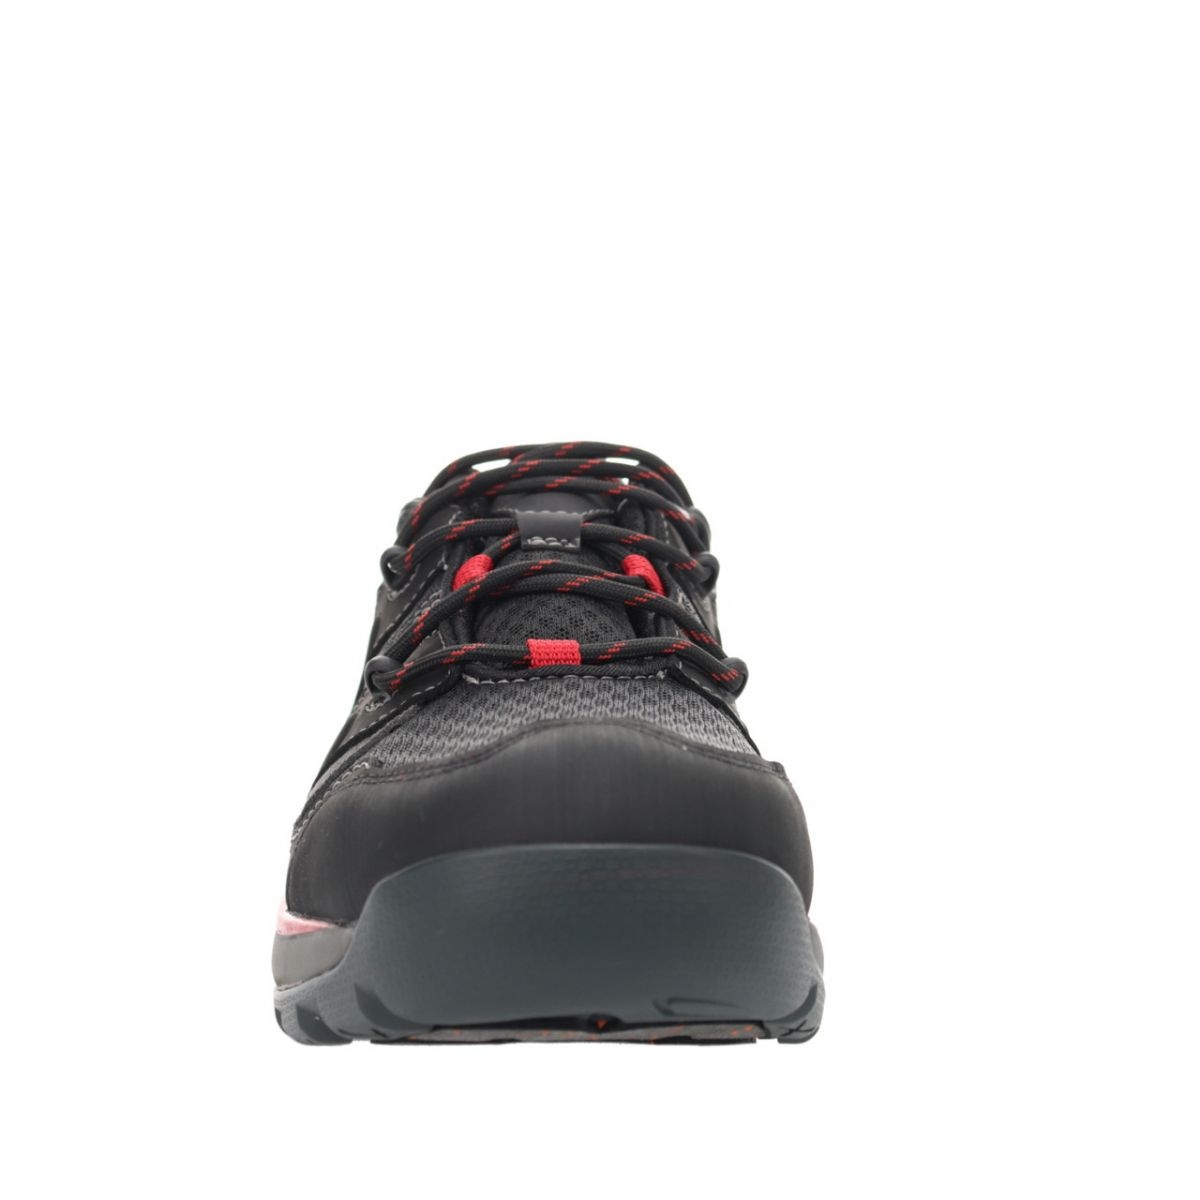 Propet Men's Vercors Hiking Shoe Black/Red - MOA002SBRD BLACK/RED - BLACK/RED, 8 X-Wide